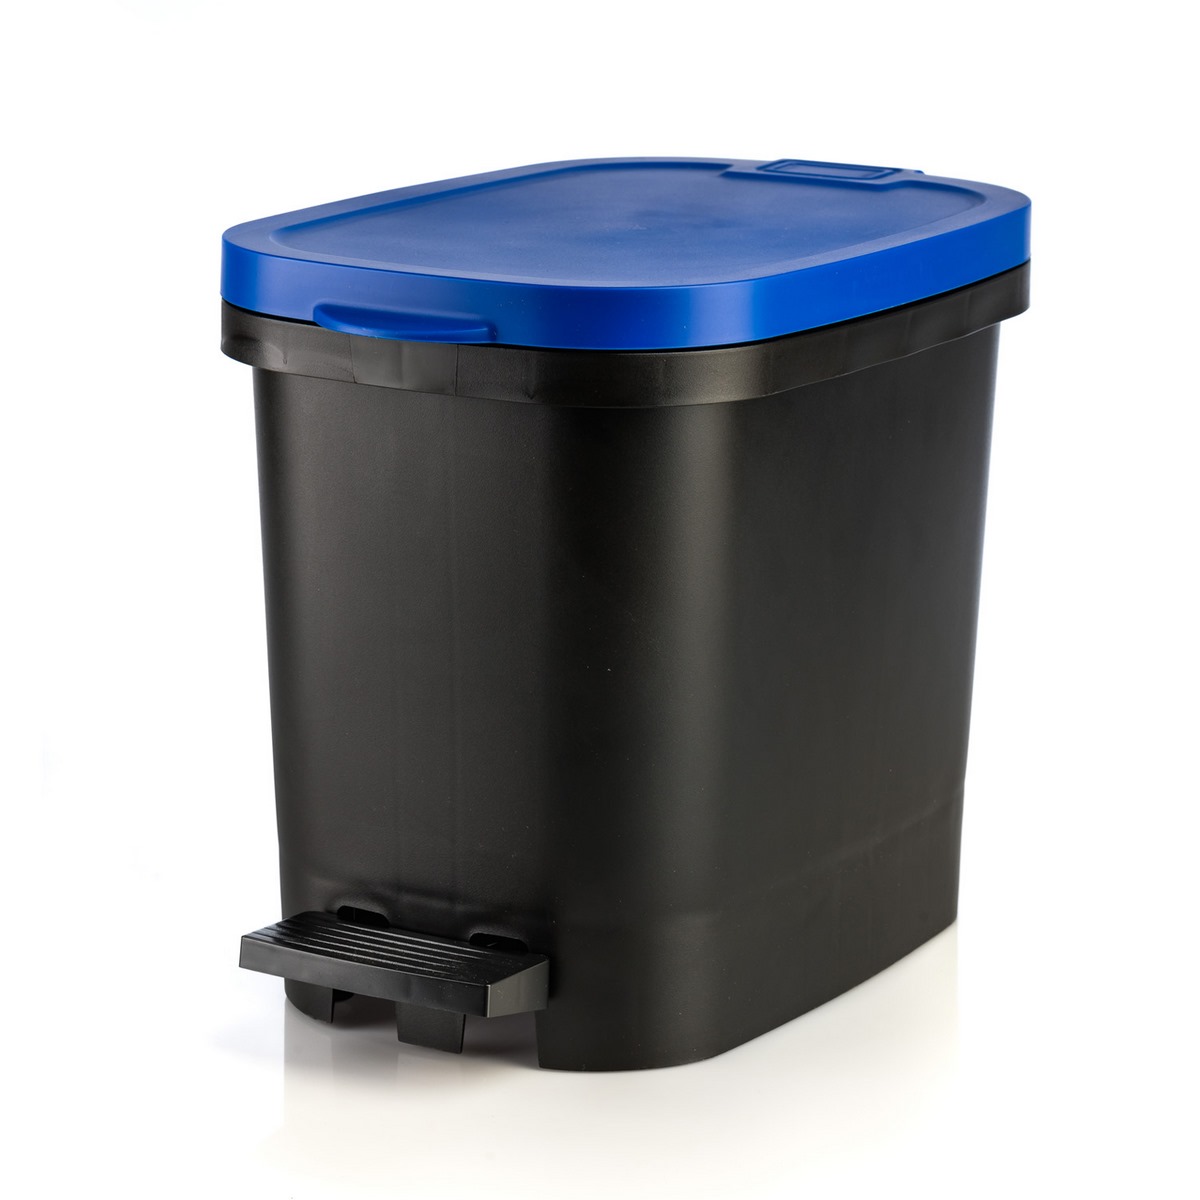 Мусорный бак с педалью BE-UTIL black blue, 23х30 см, 35 см, 10 л, Пластик, Faplana, Португалия